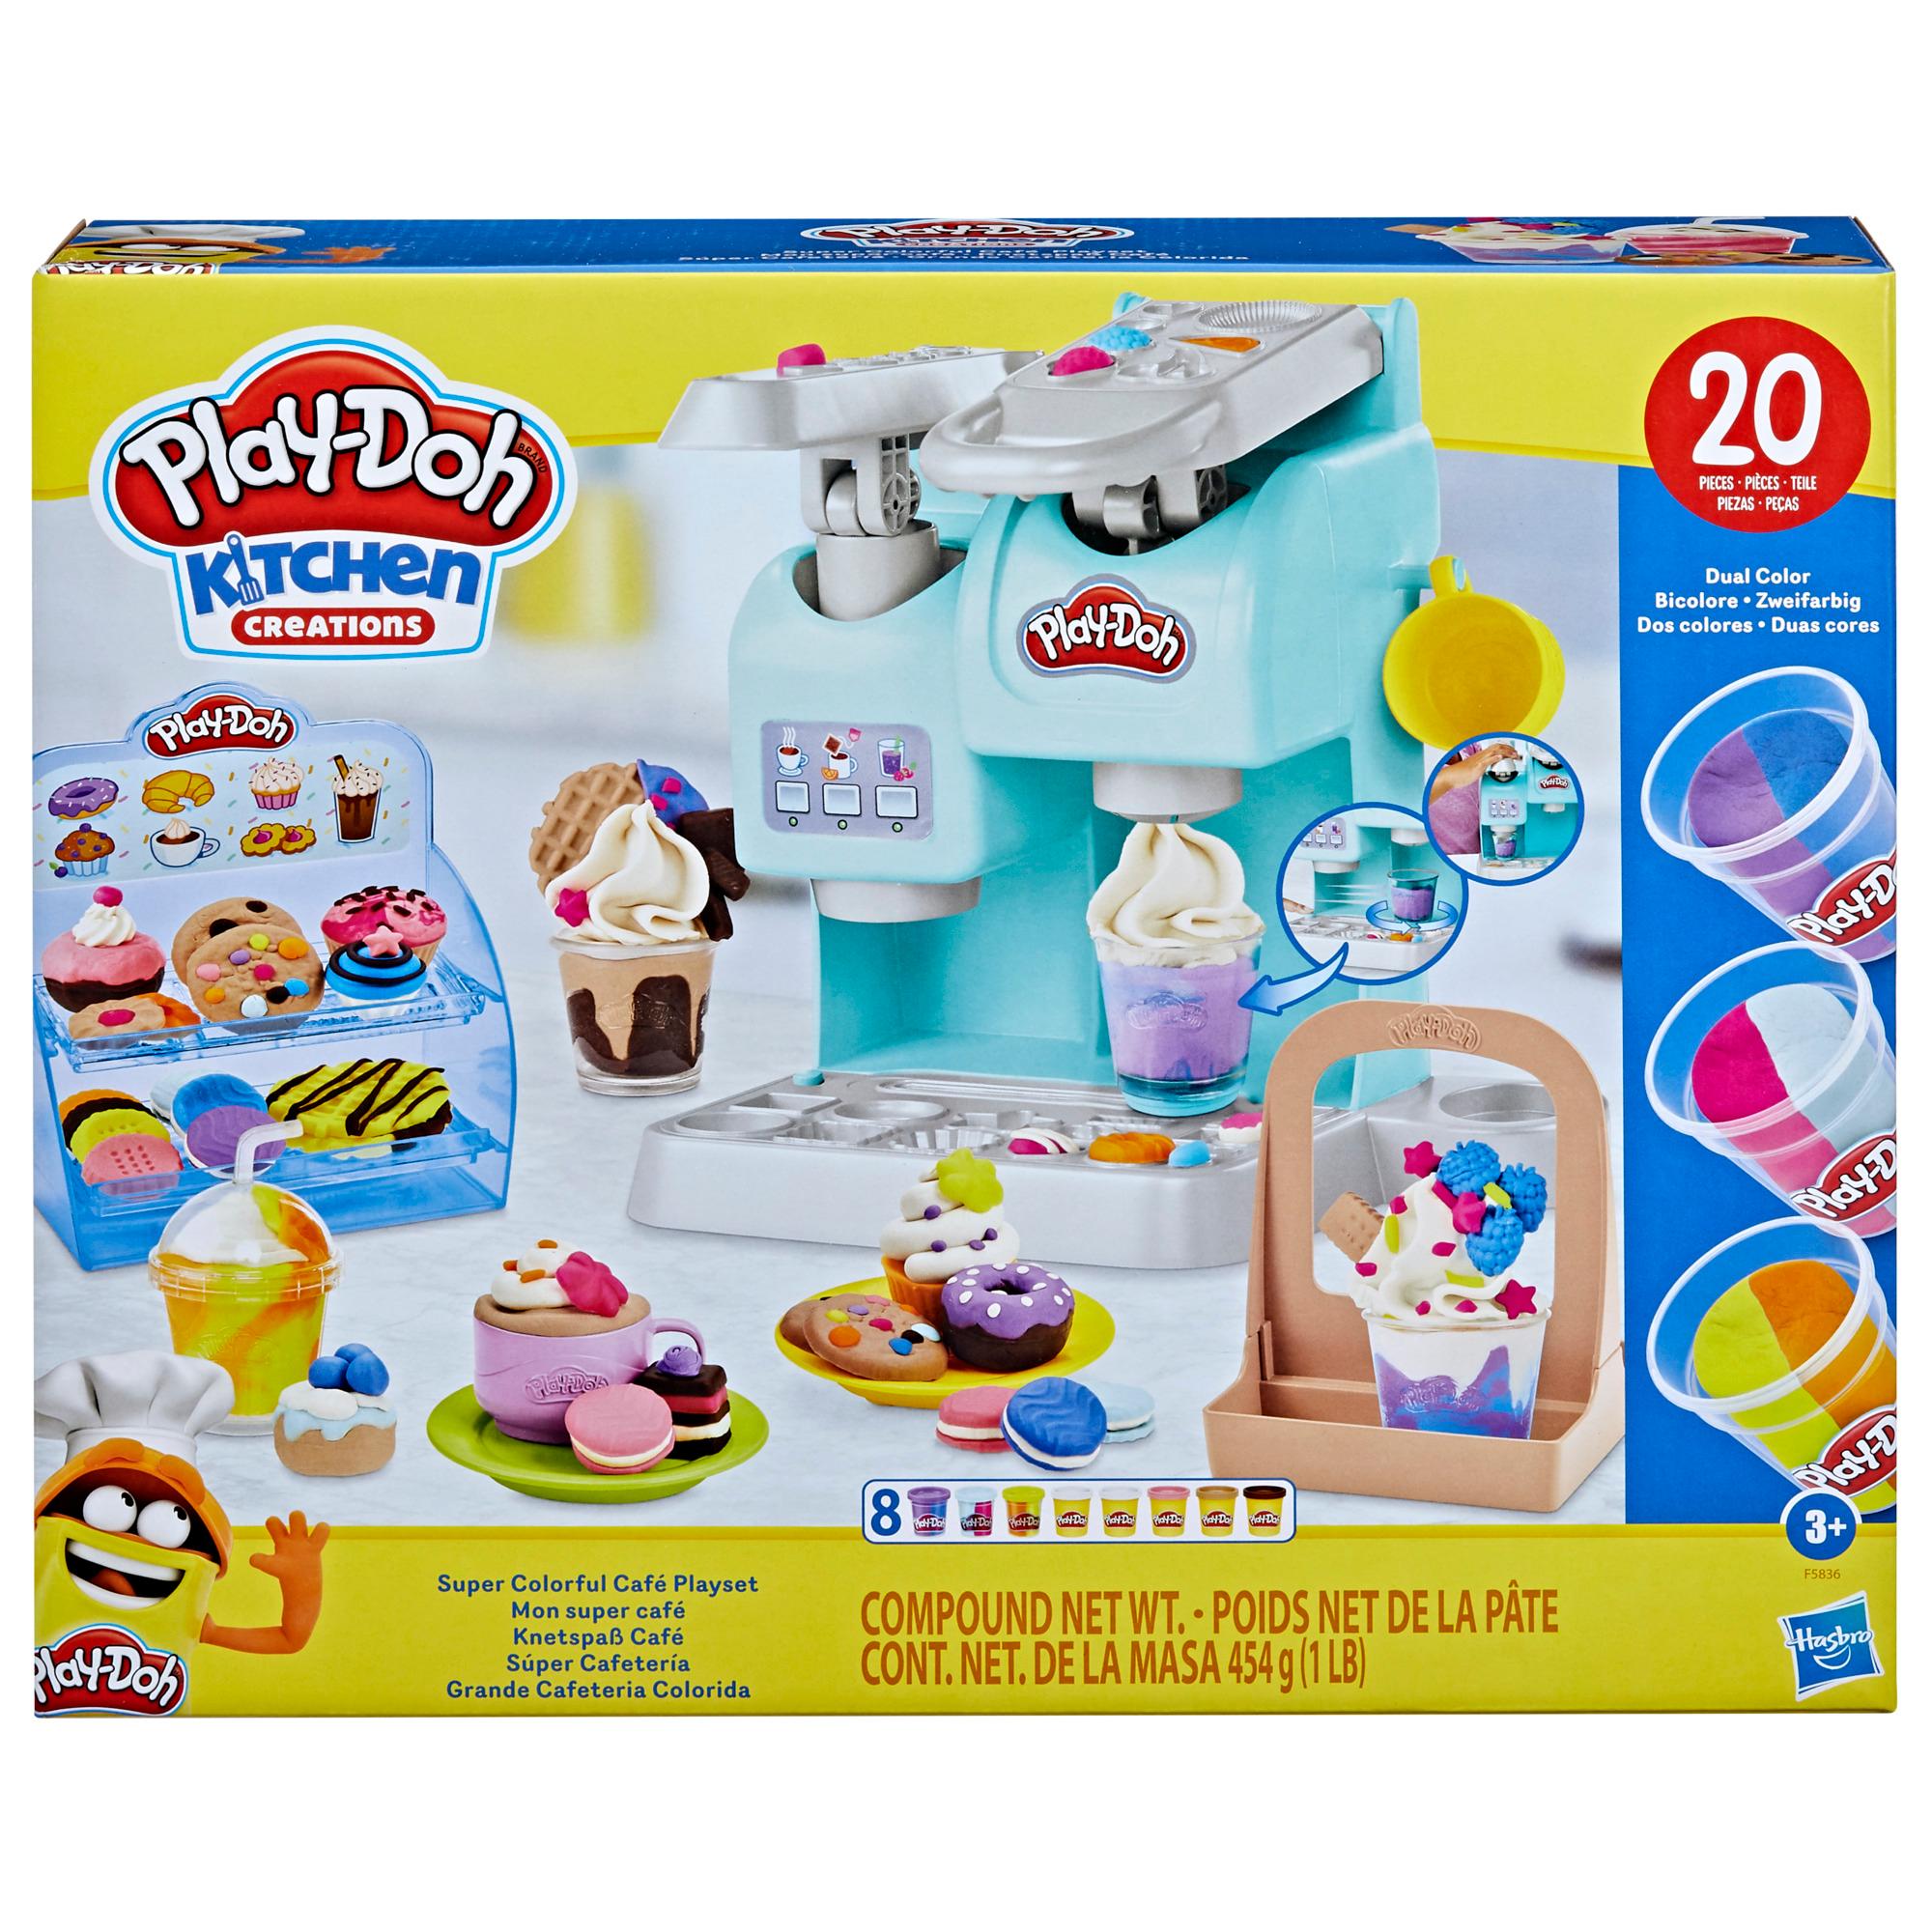 Play-Doh Kitchen Creations Mon super café - Play-Doh